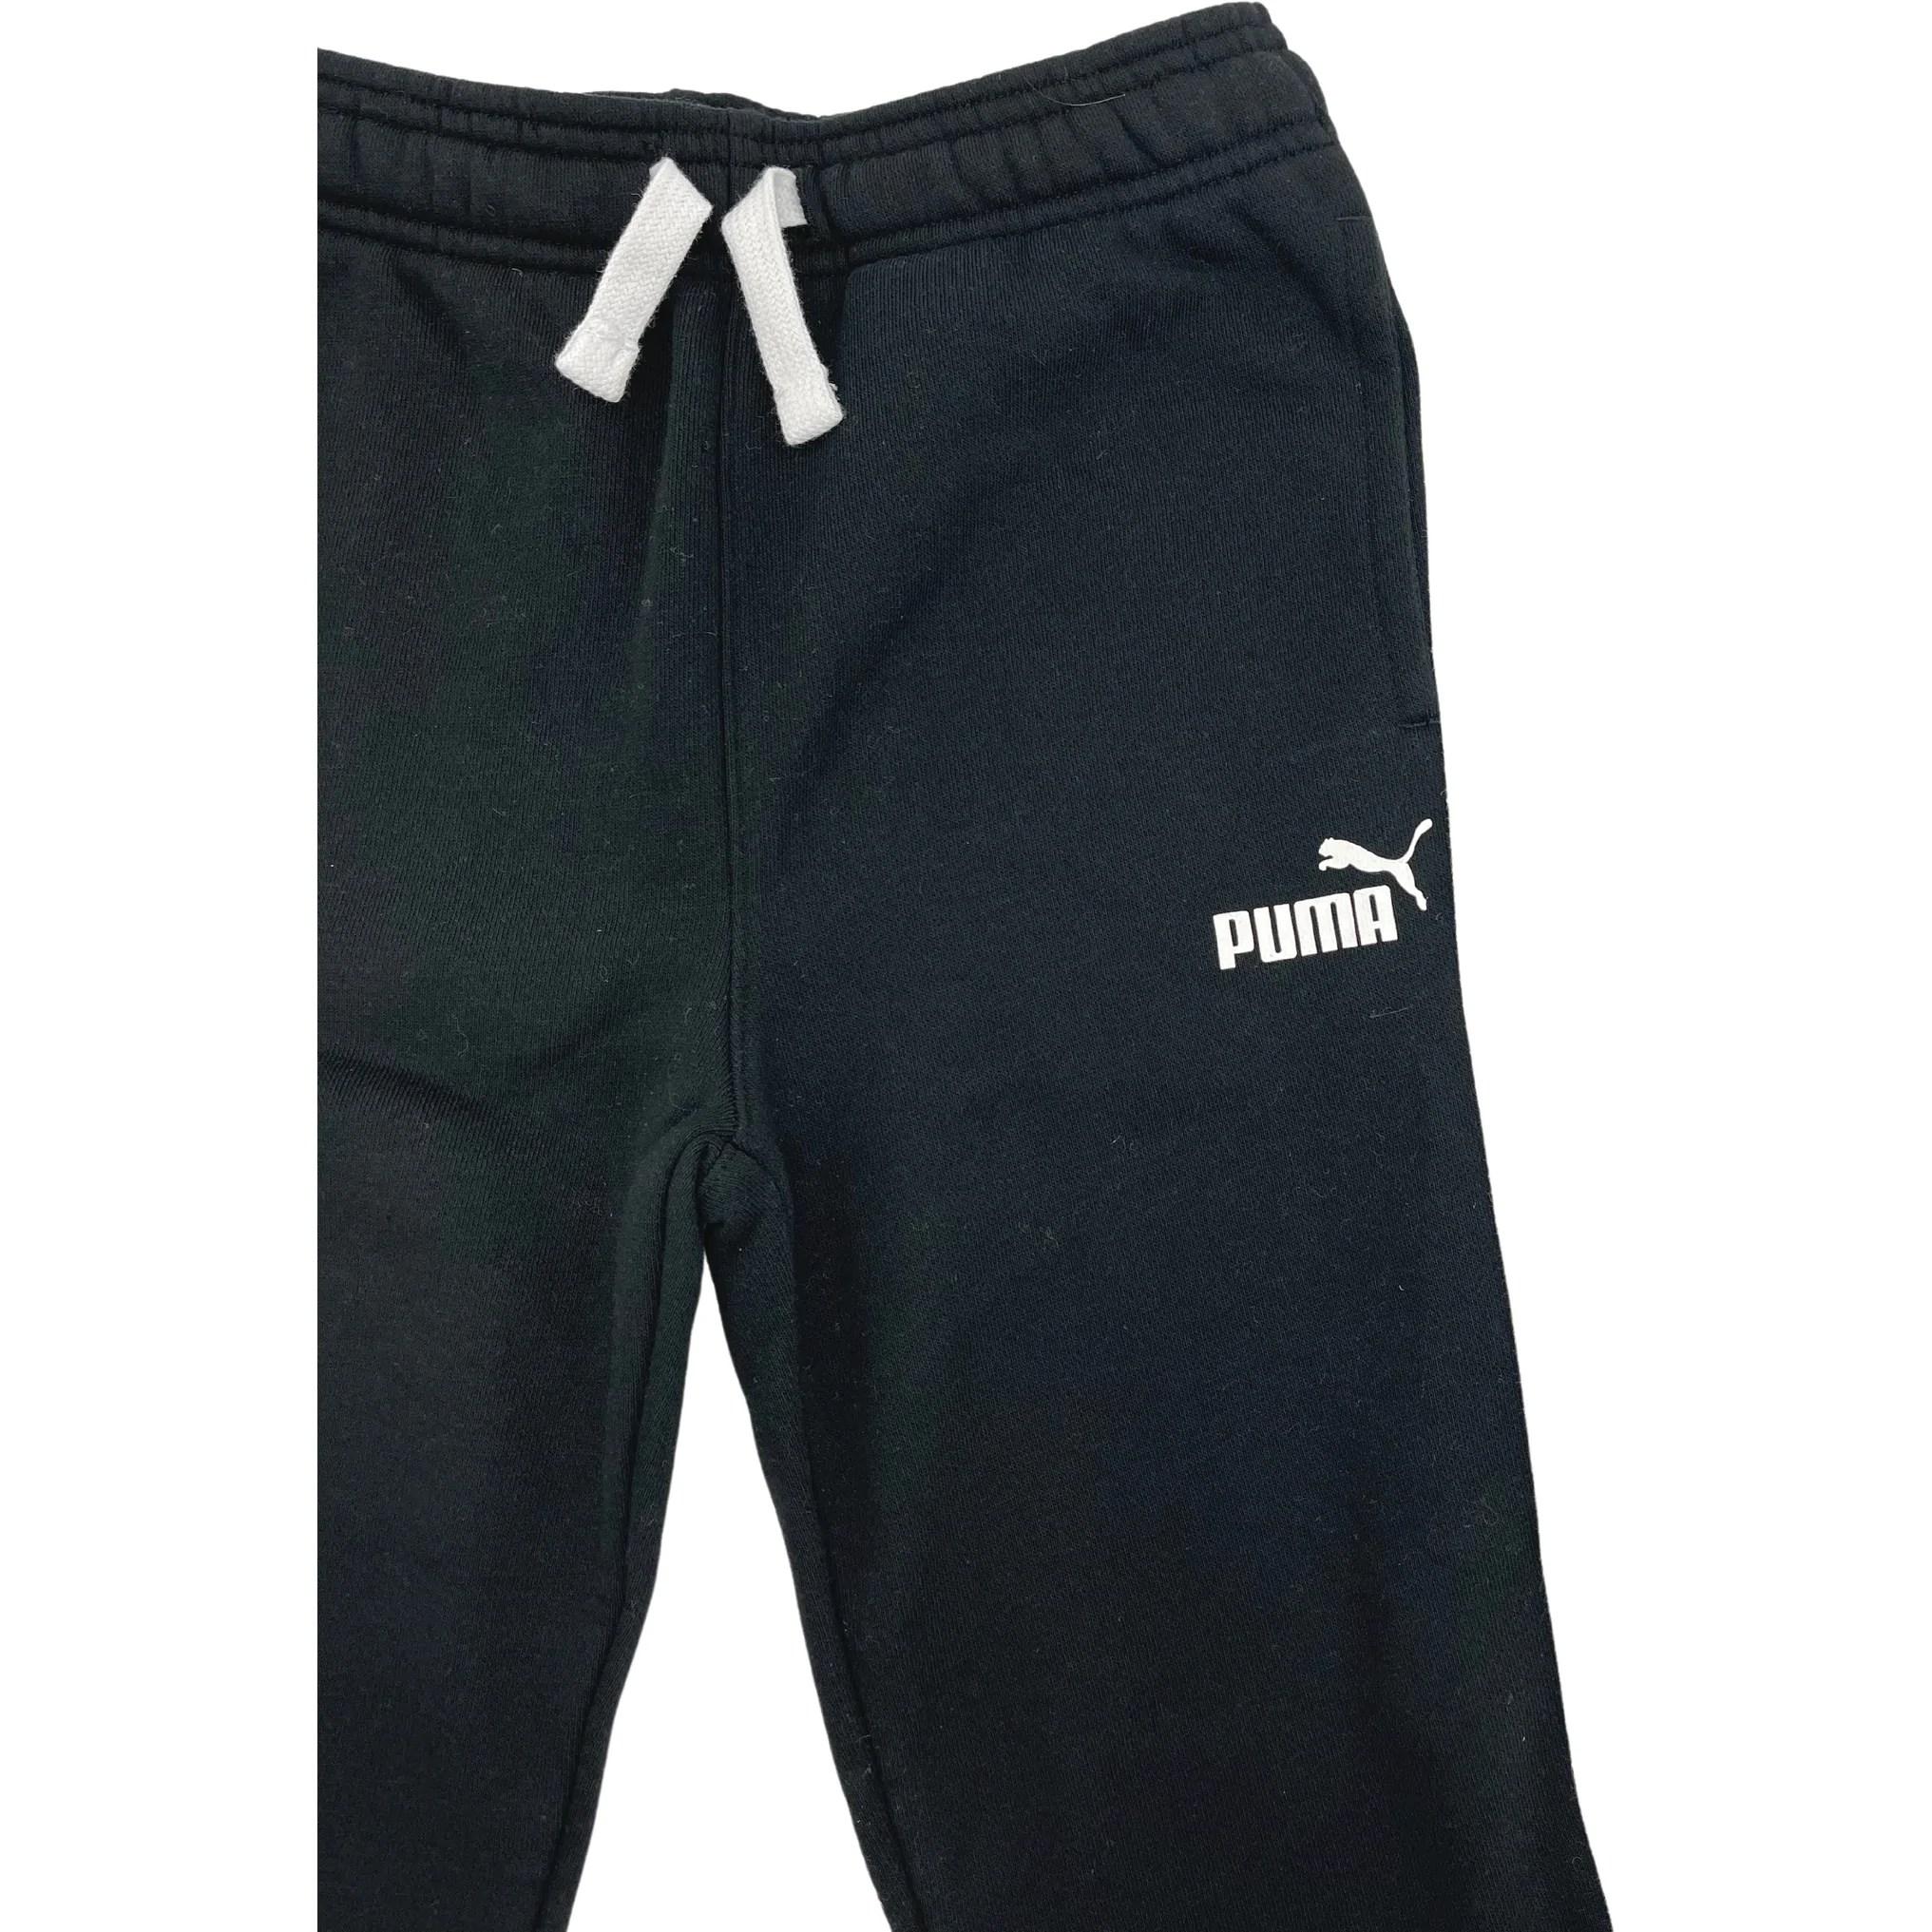 Puma Boy's Sweatpants / Boy's Jogging Pants / Black & White / Size Medium